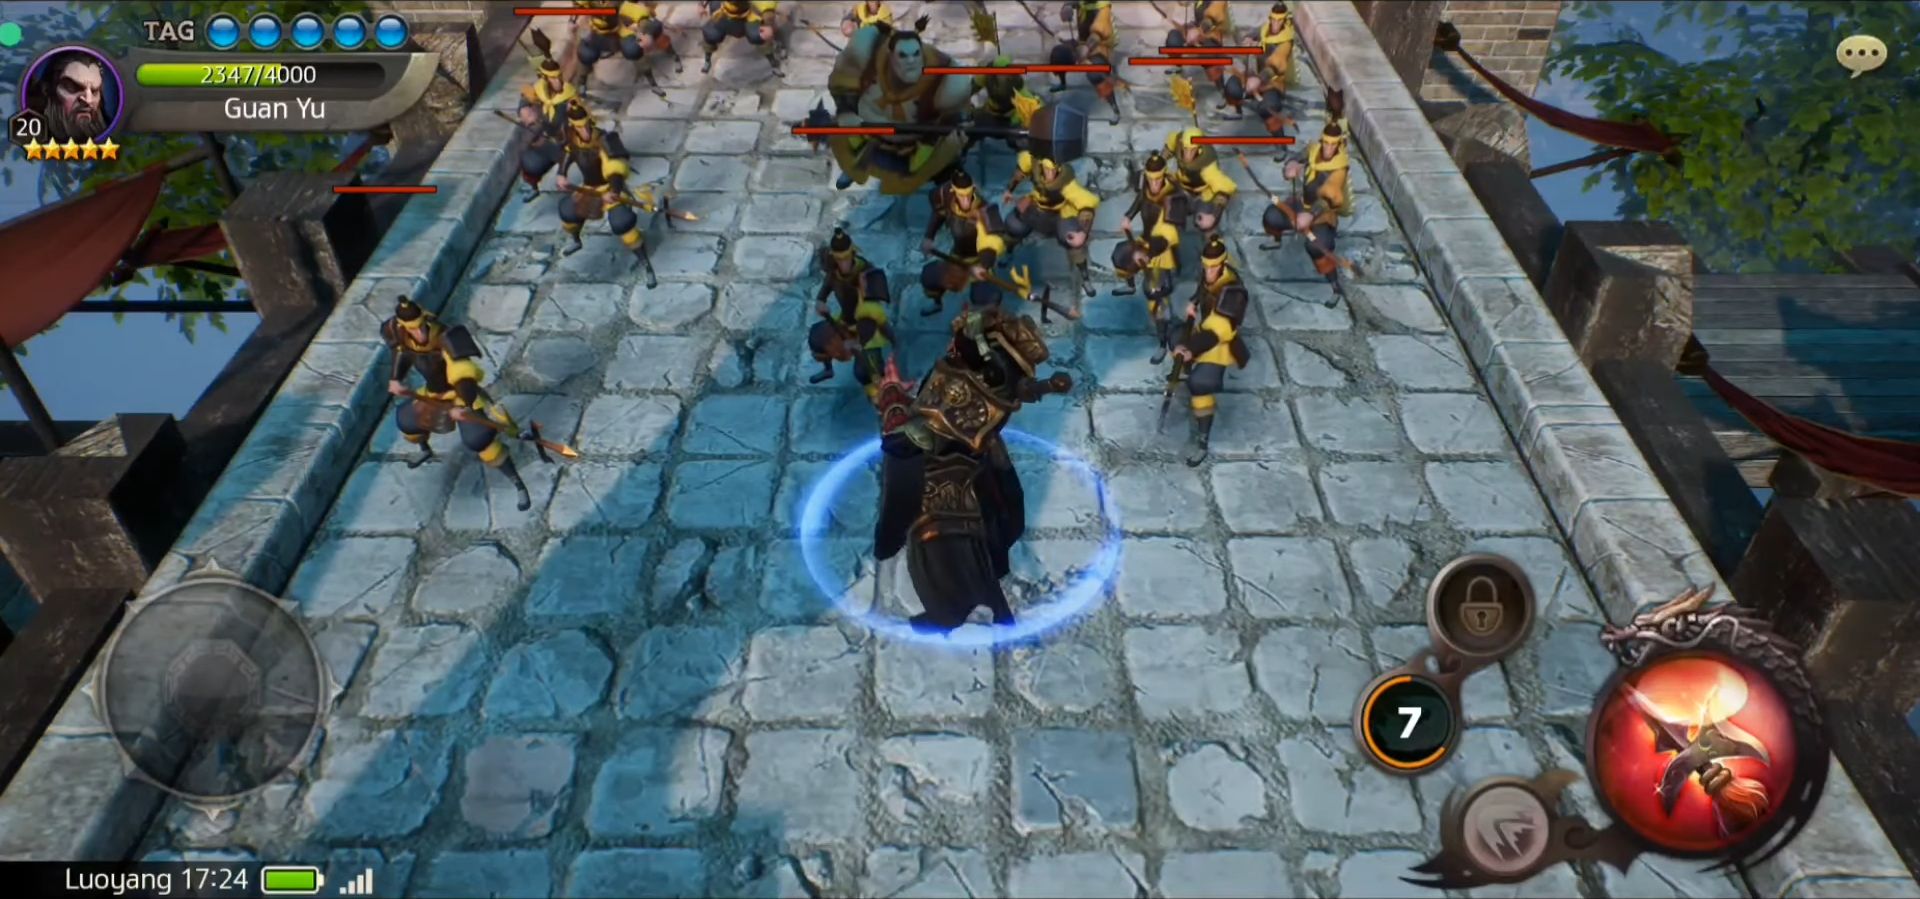 Three Kingdoms: Legends of War - Android game screenshots.